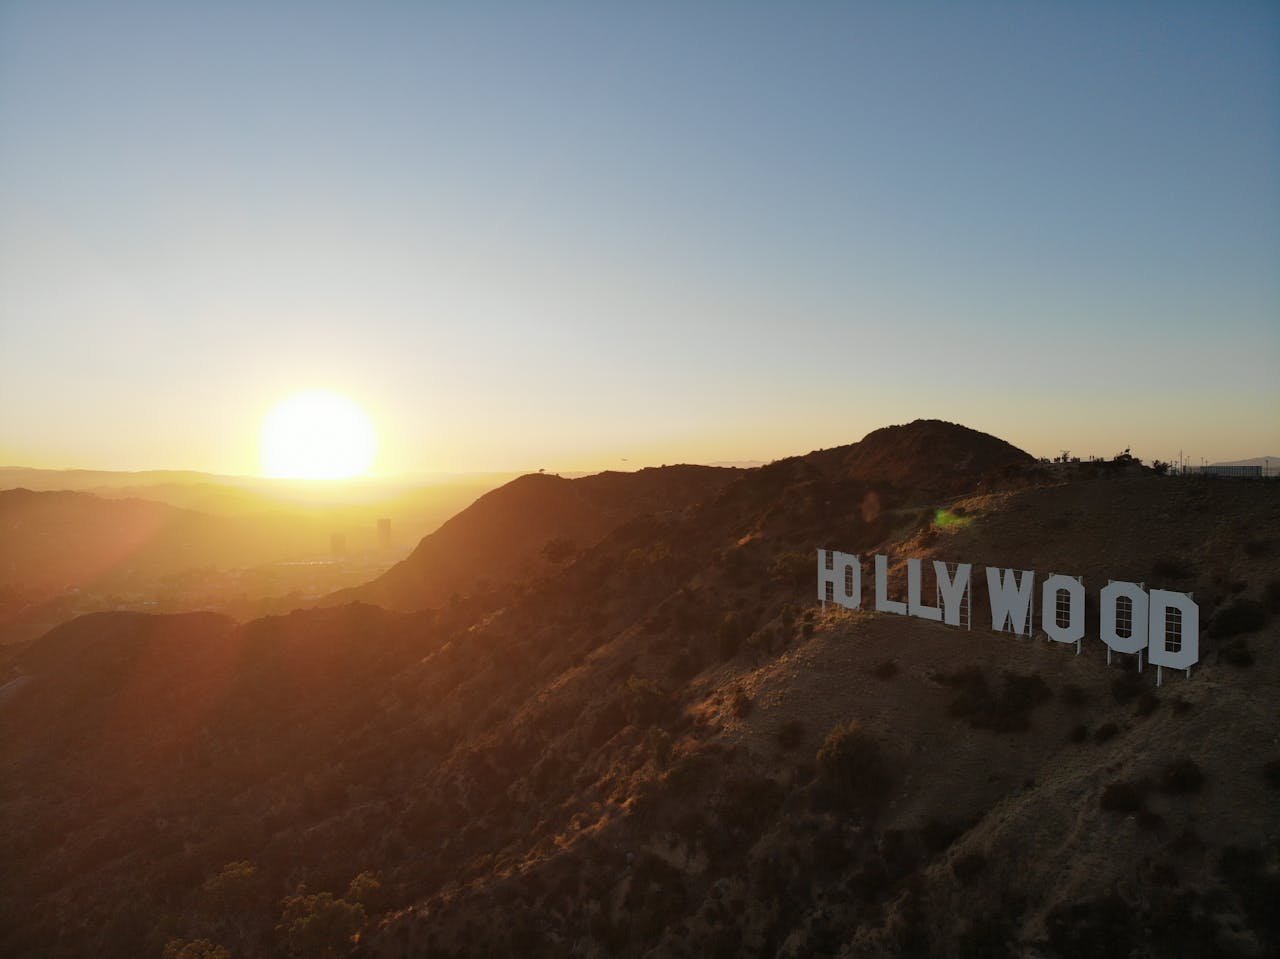 Hollywood Hills as a Celebrity Neighborhood